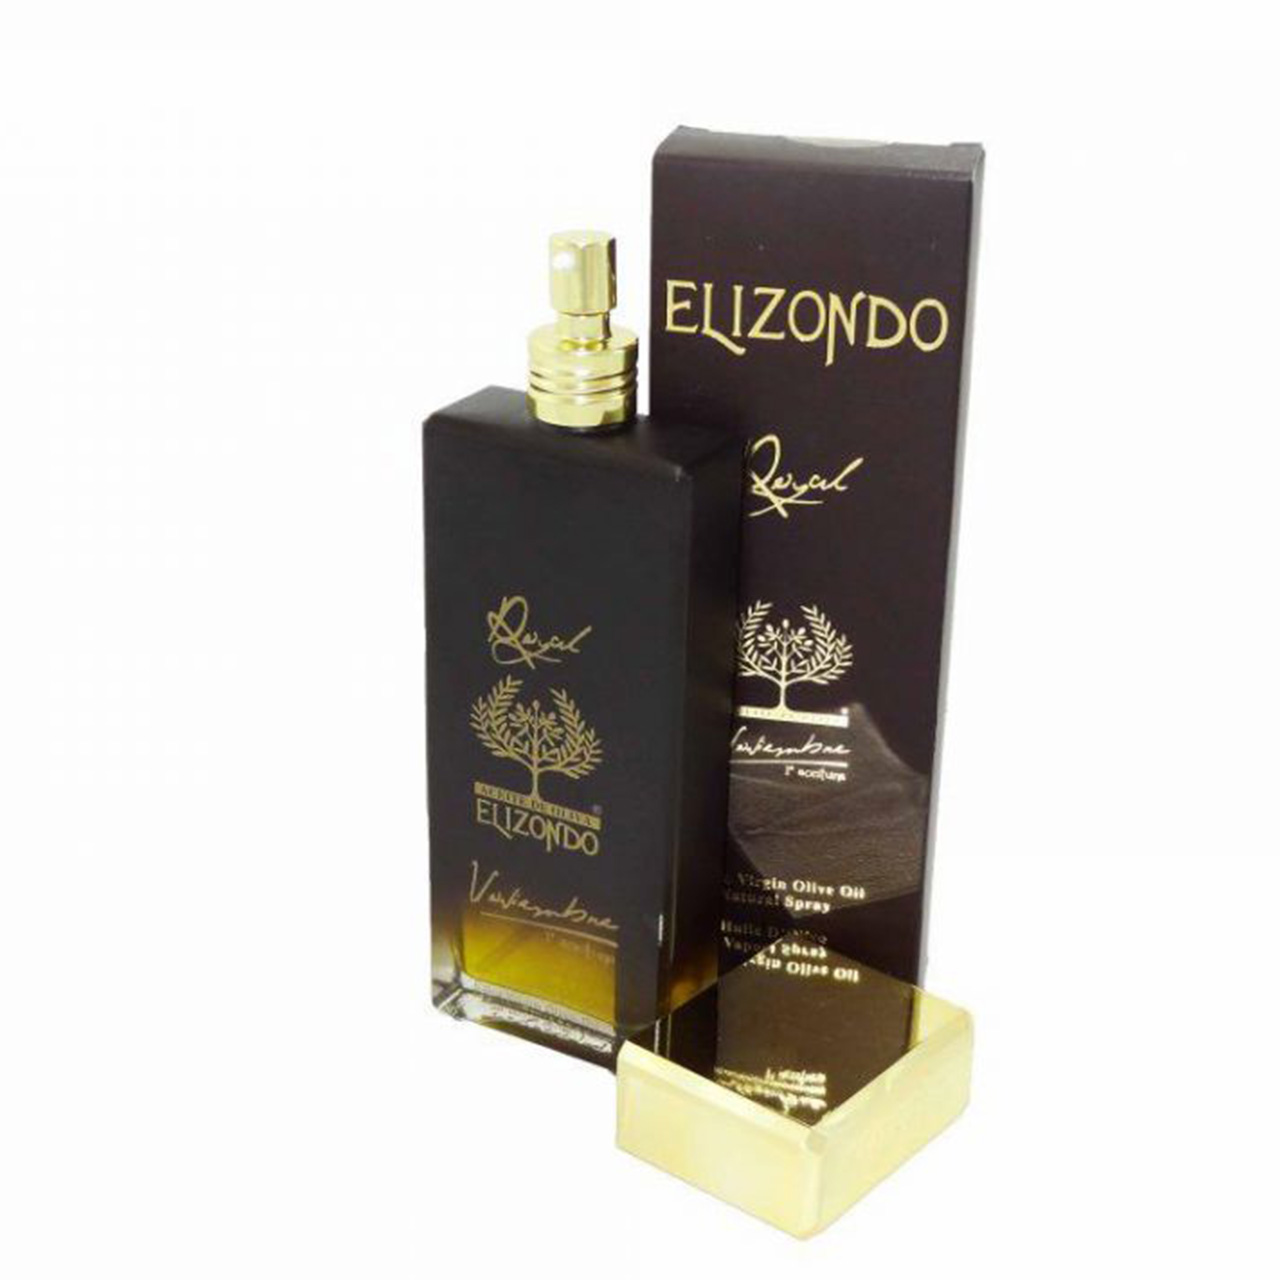 Elizondo Royal Olivenöl 200ml Spray